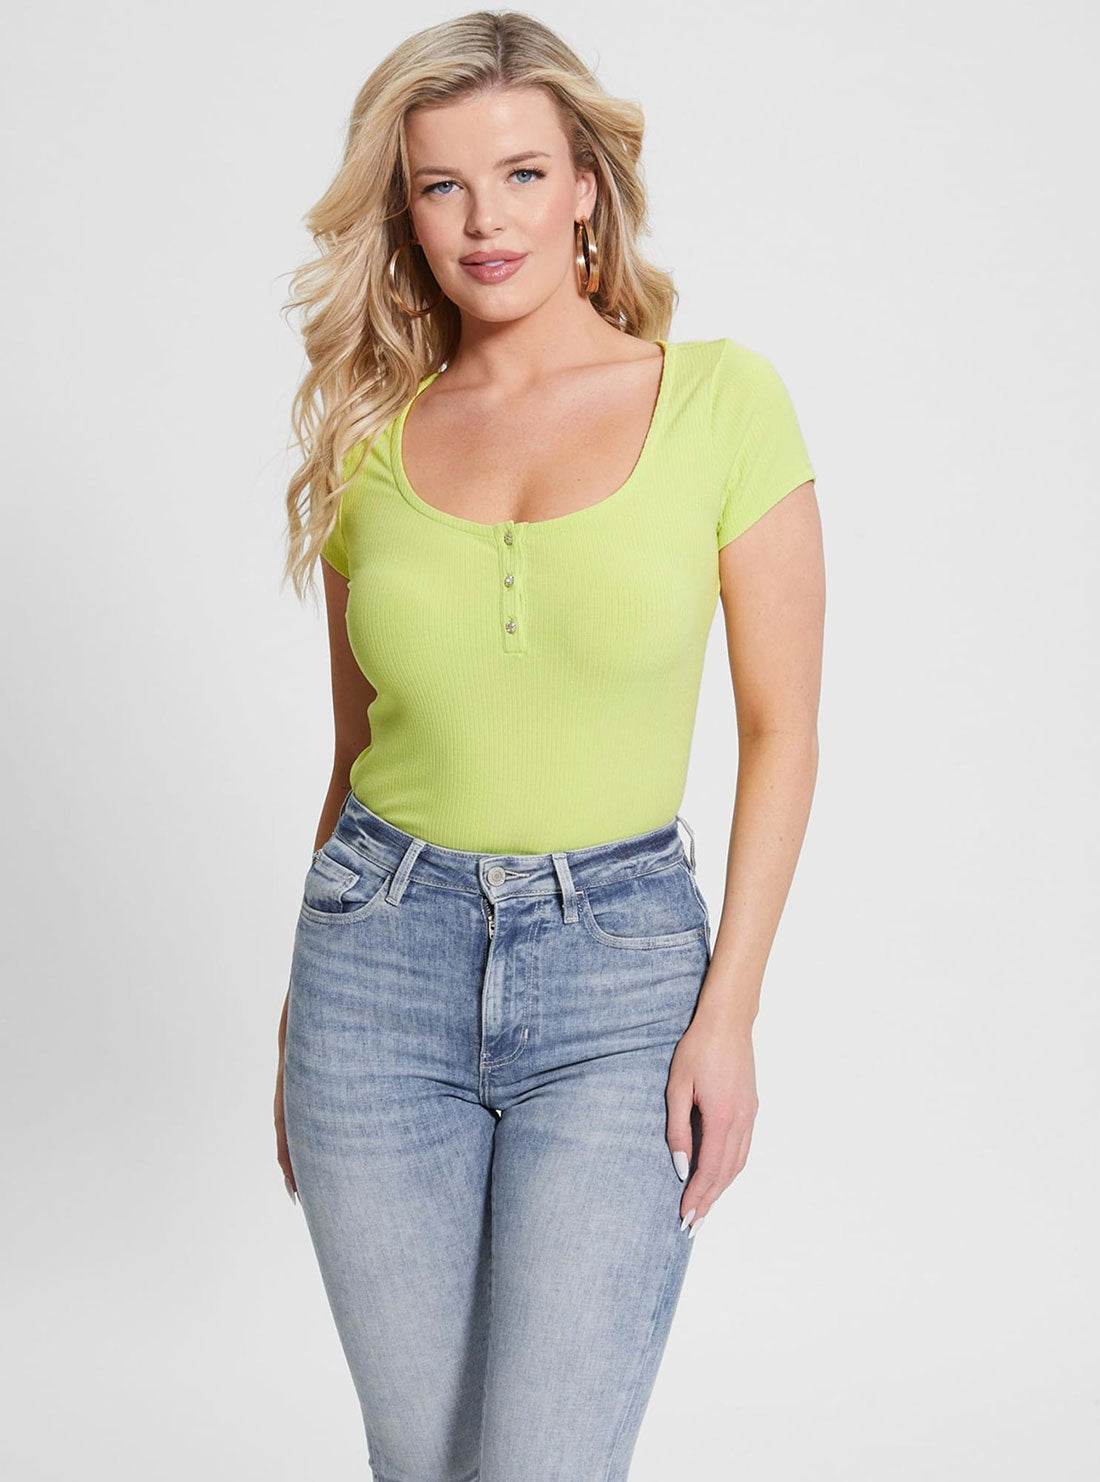 Eco Light Green Karlee Jewel Henley T-Shirt | GUESS Women's | Front view